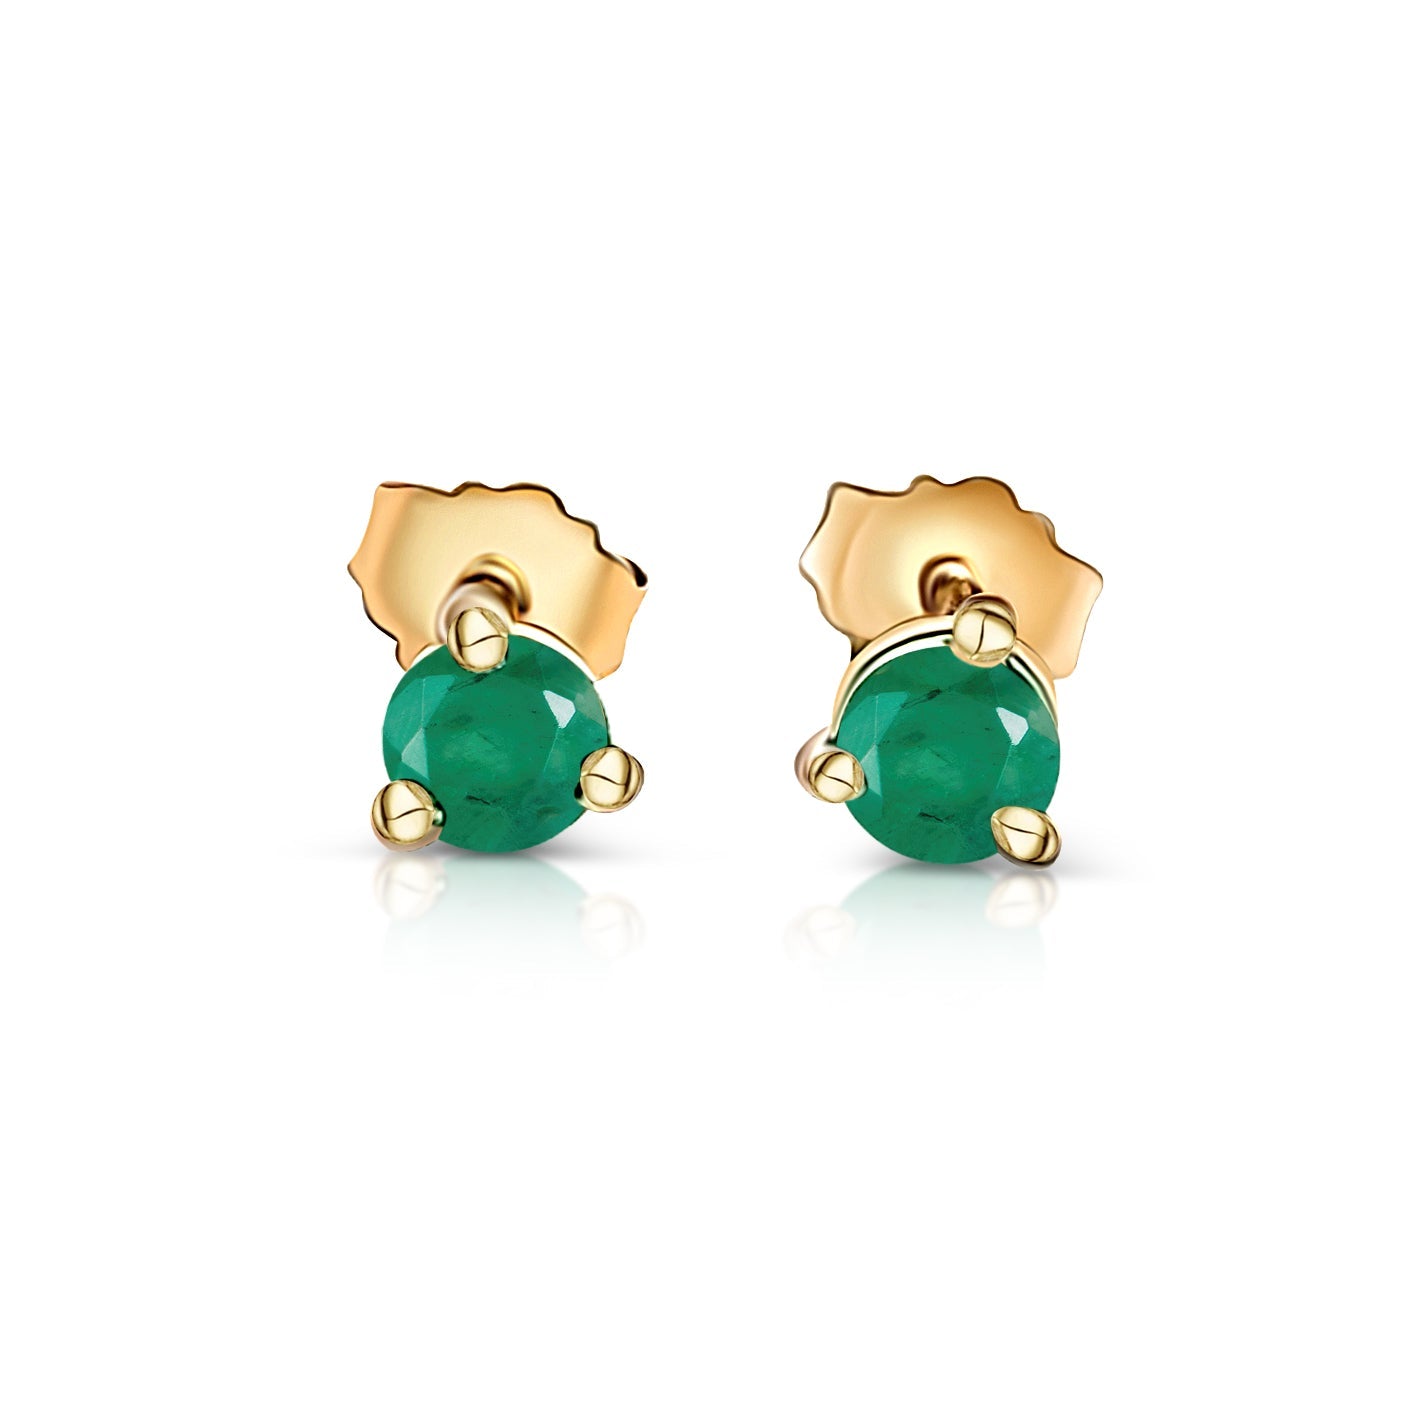 2 Carat Round Cut Natural Emerald Stud Earrings in 14K Yellow Gold 3-Prong Martini Setting-Earrings-ASSAY